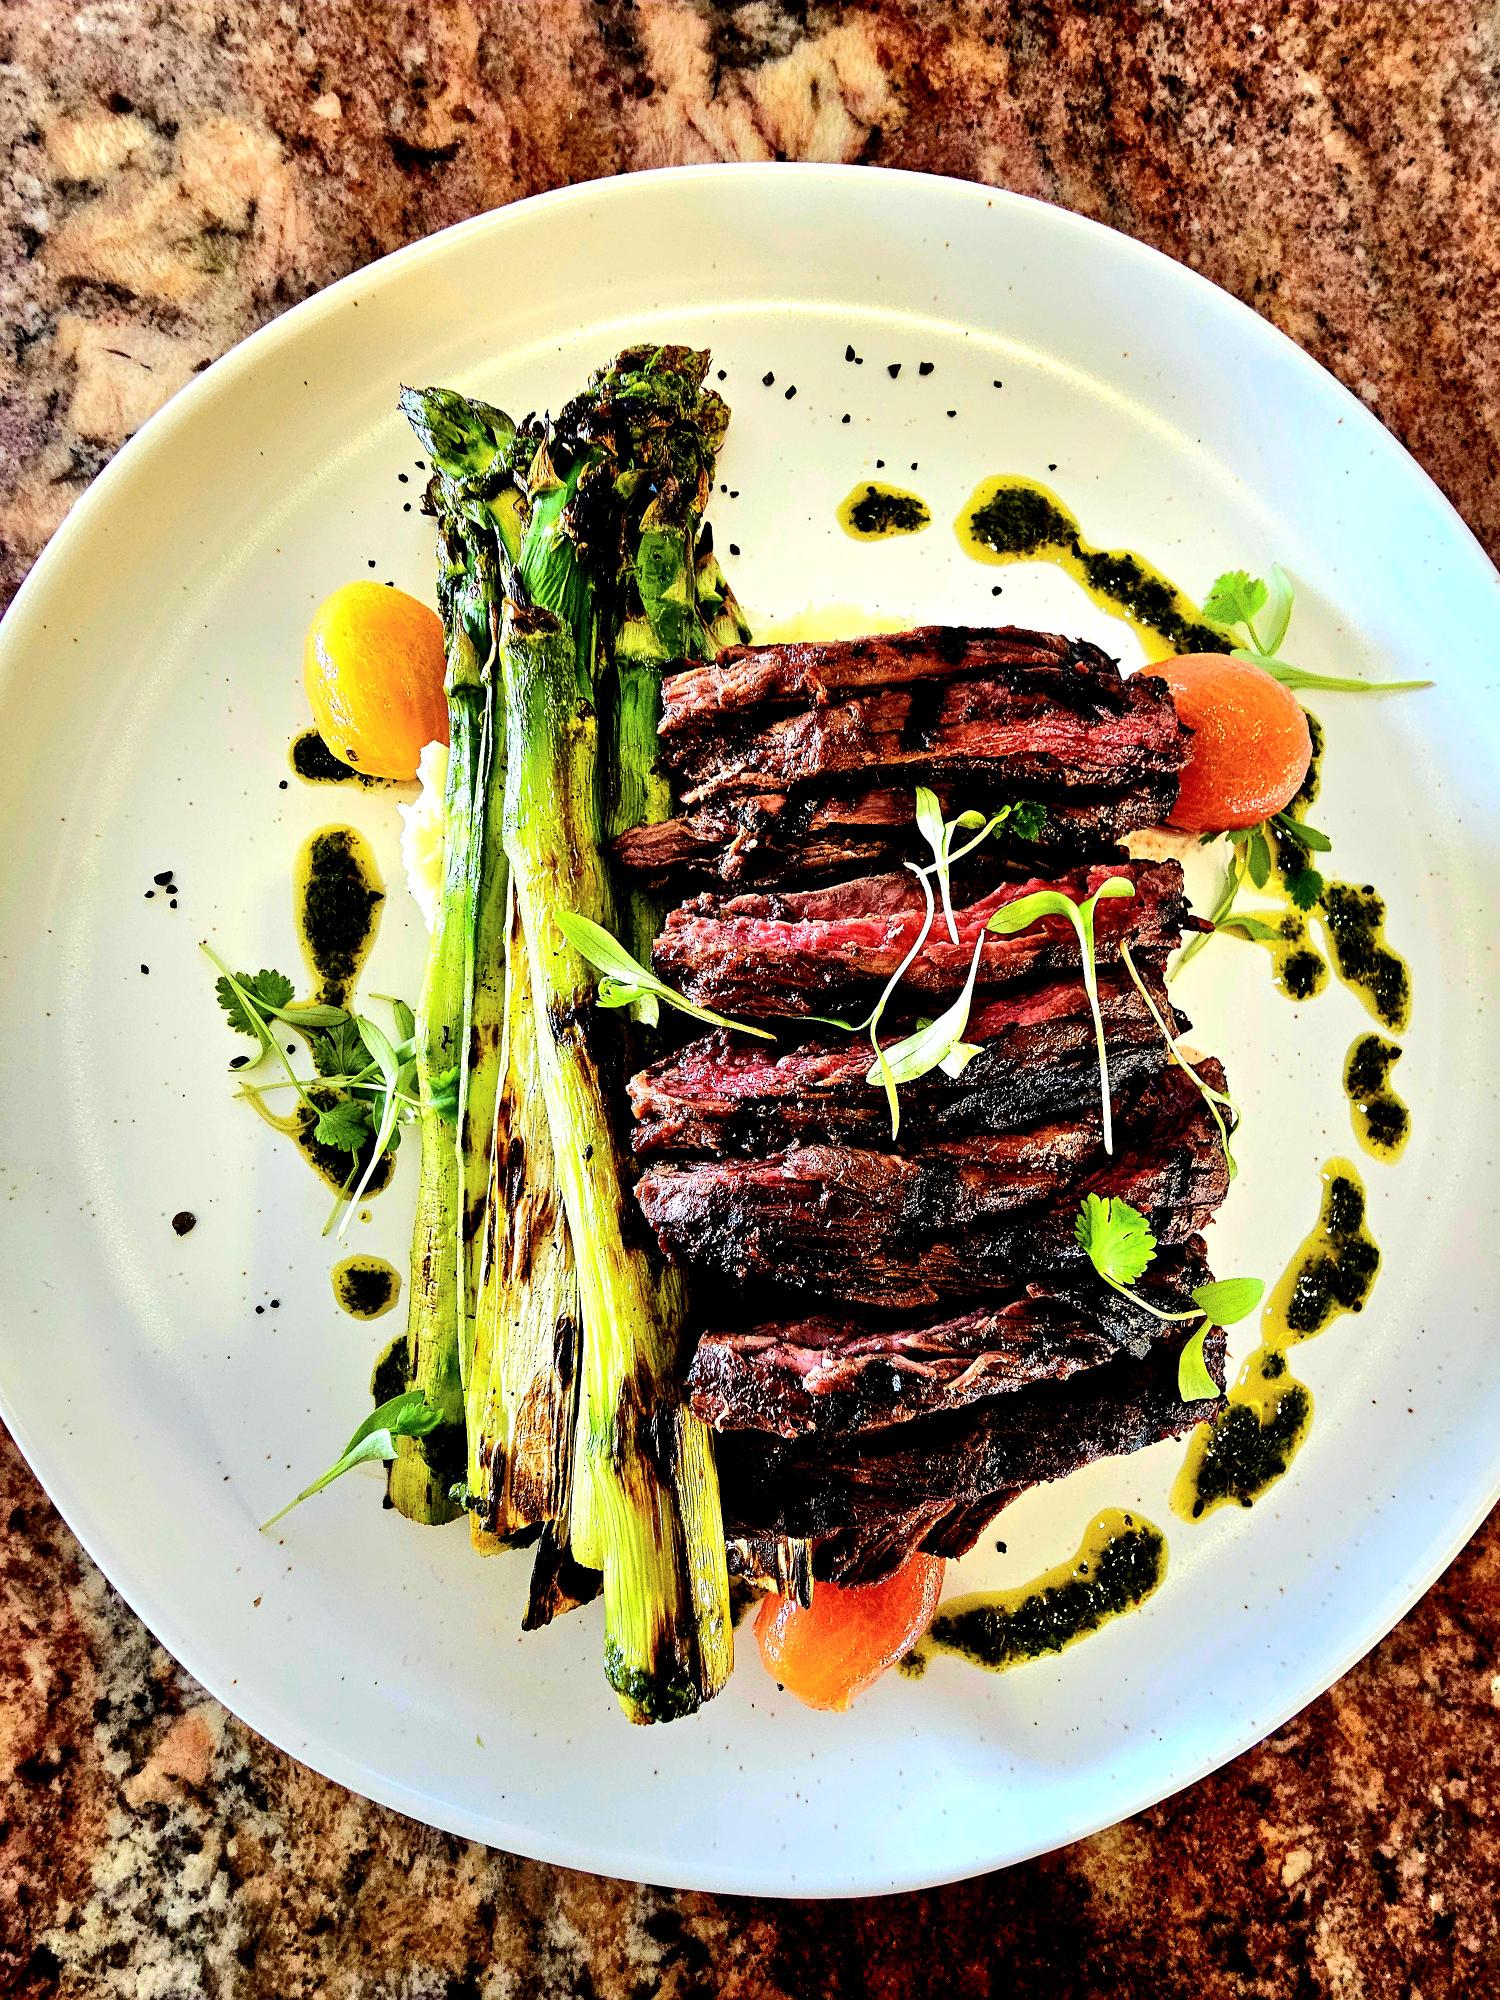 Steak and Asparagus at the Aurora restaurant